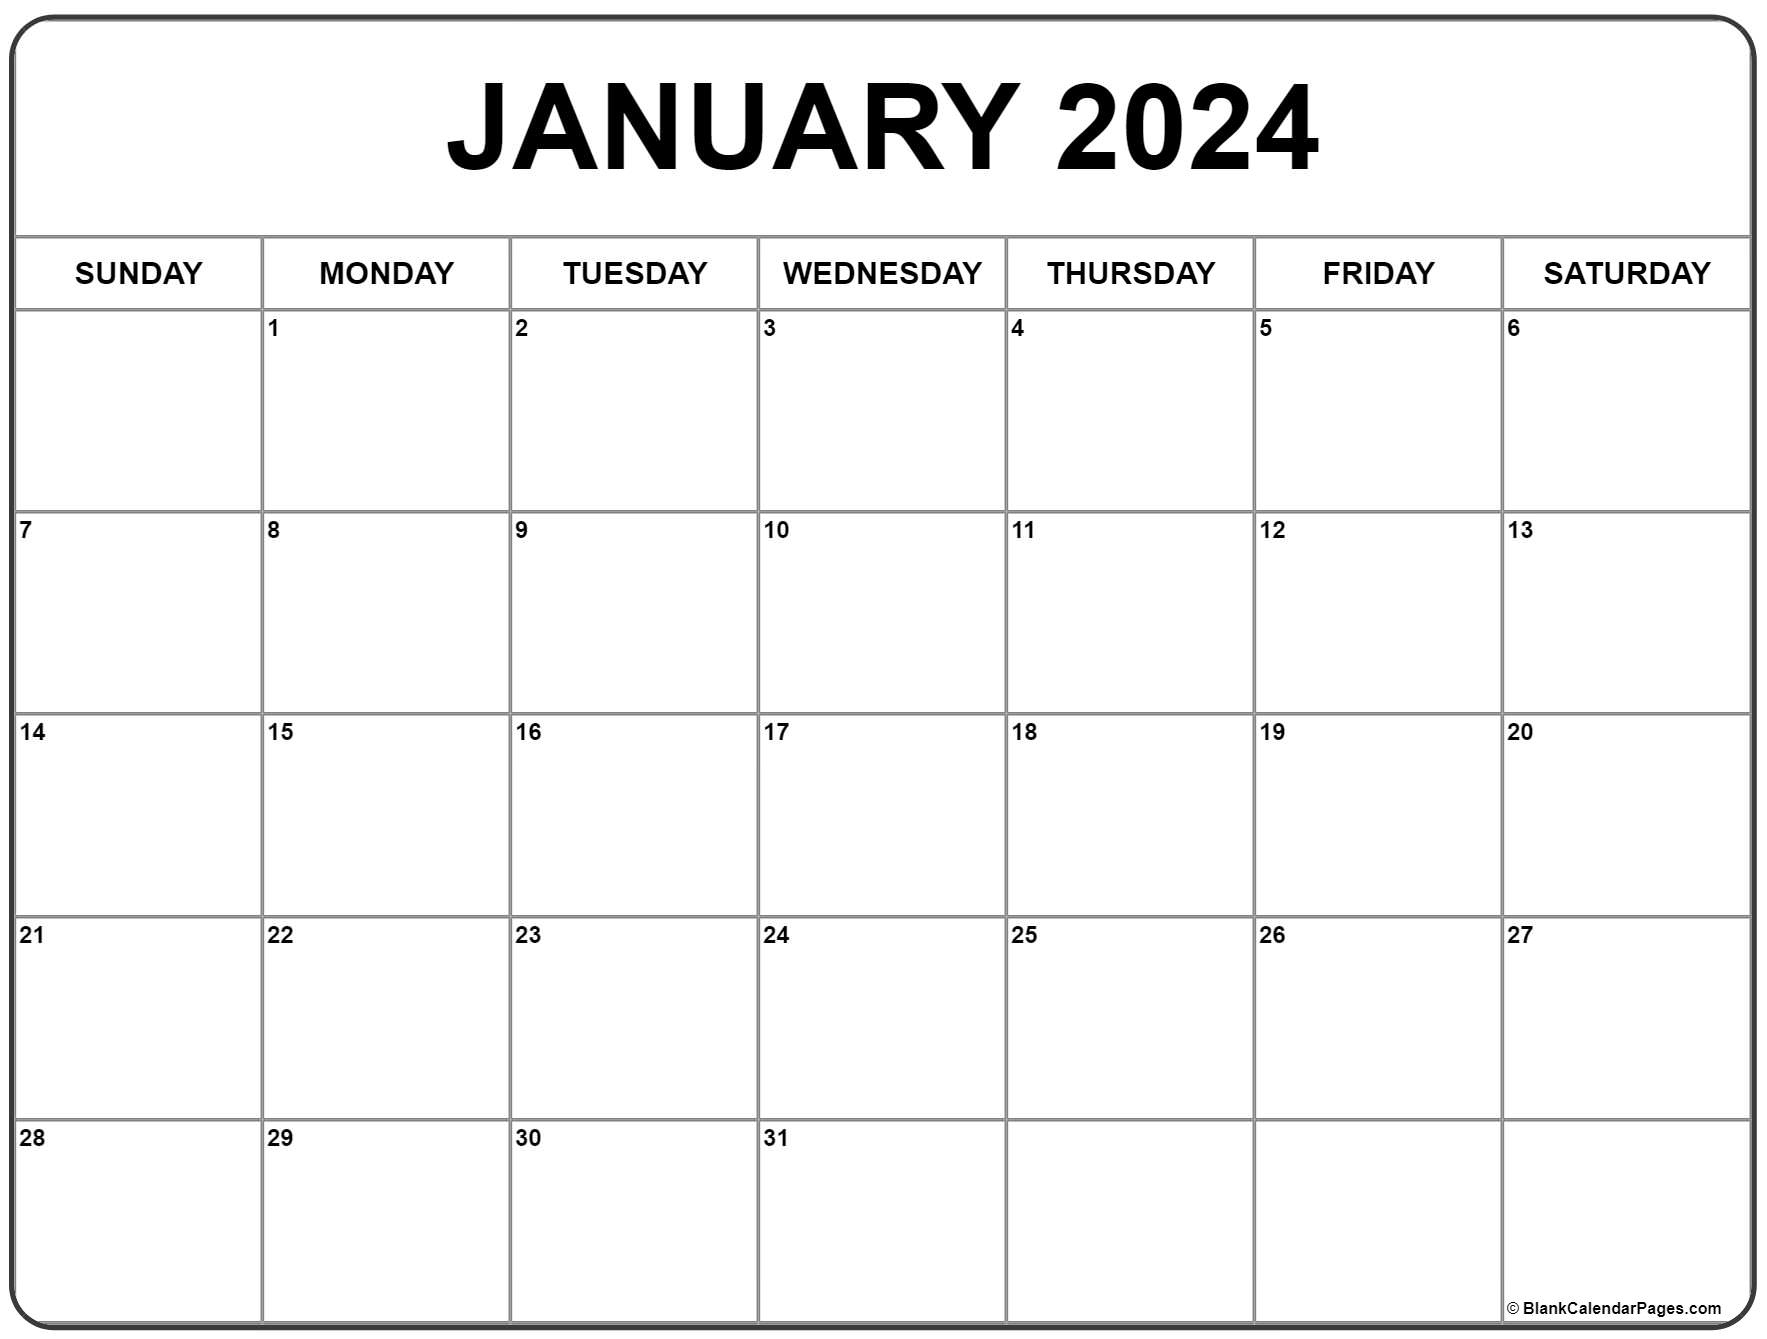 January 2024 Calendar | Free Printable Calendar | Free Printable Calendar 2024 Monthly